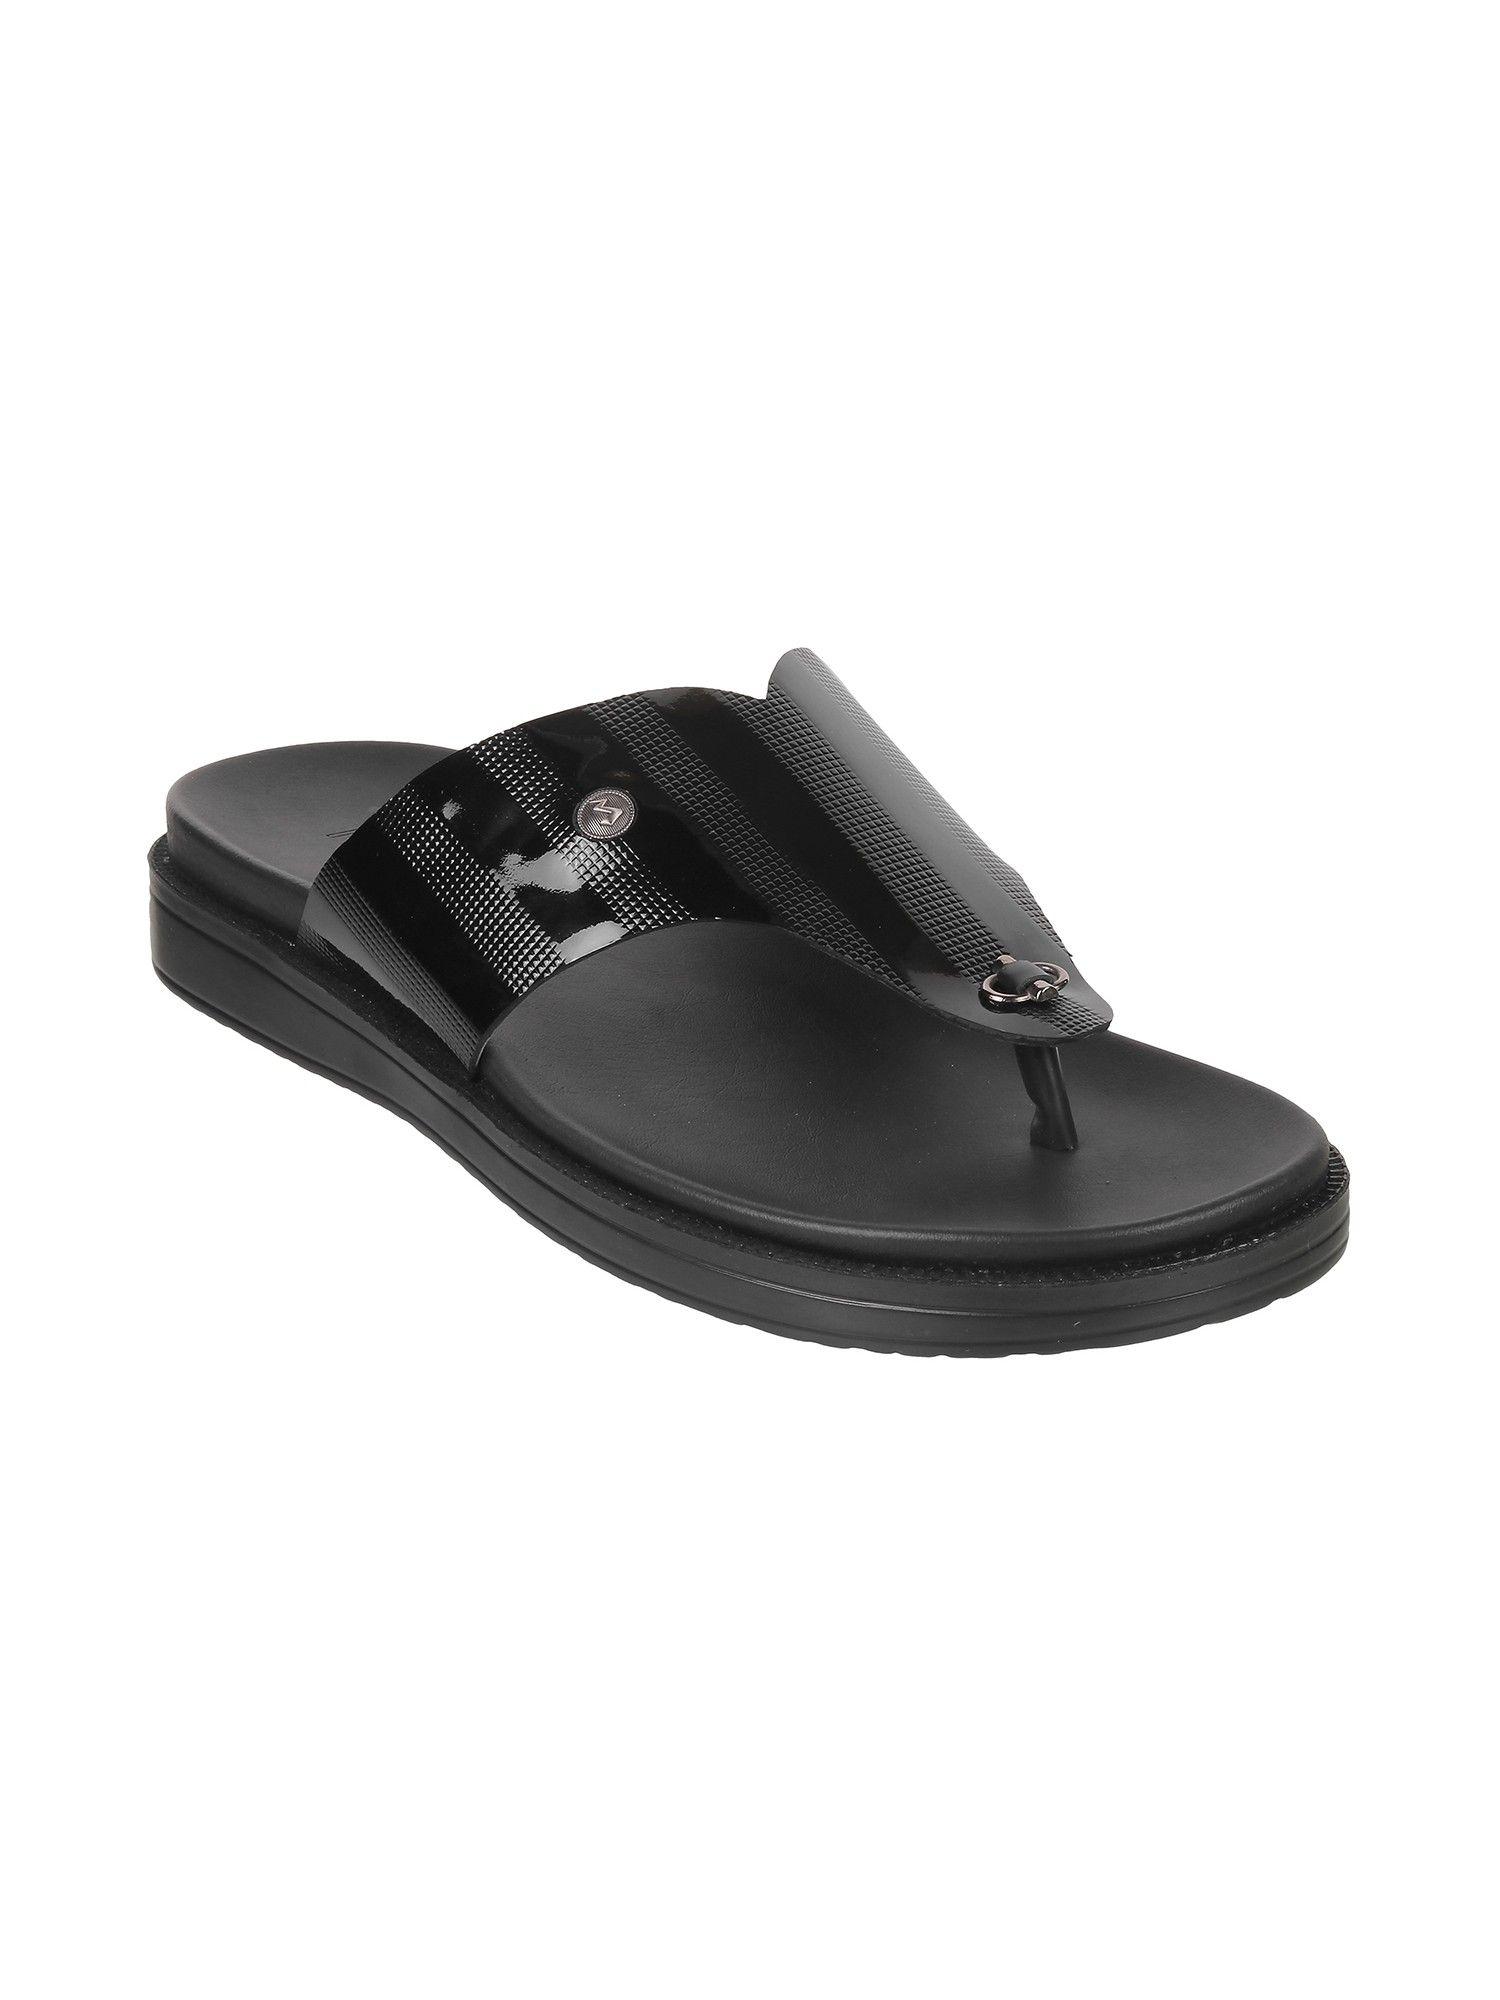 mens-black-flat-chappalsmetro-mens-black-synthetic-textured-sandals